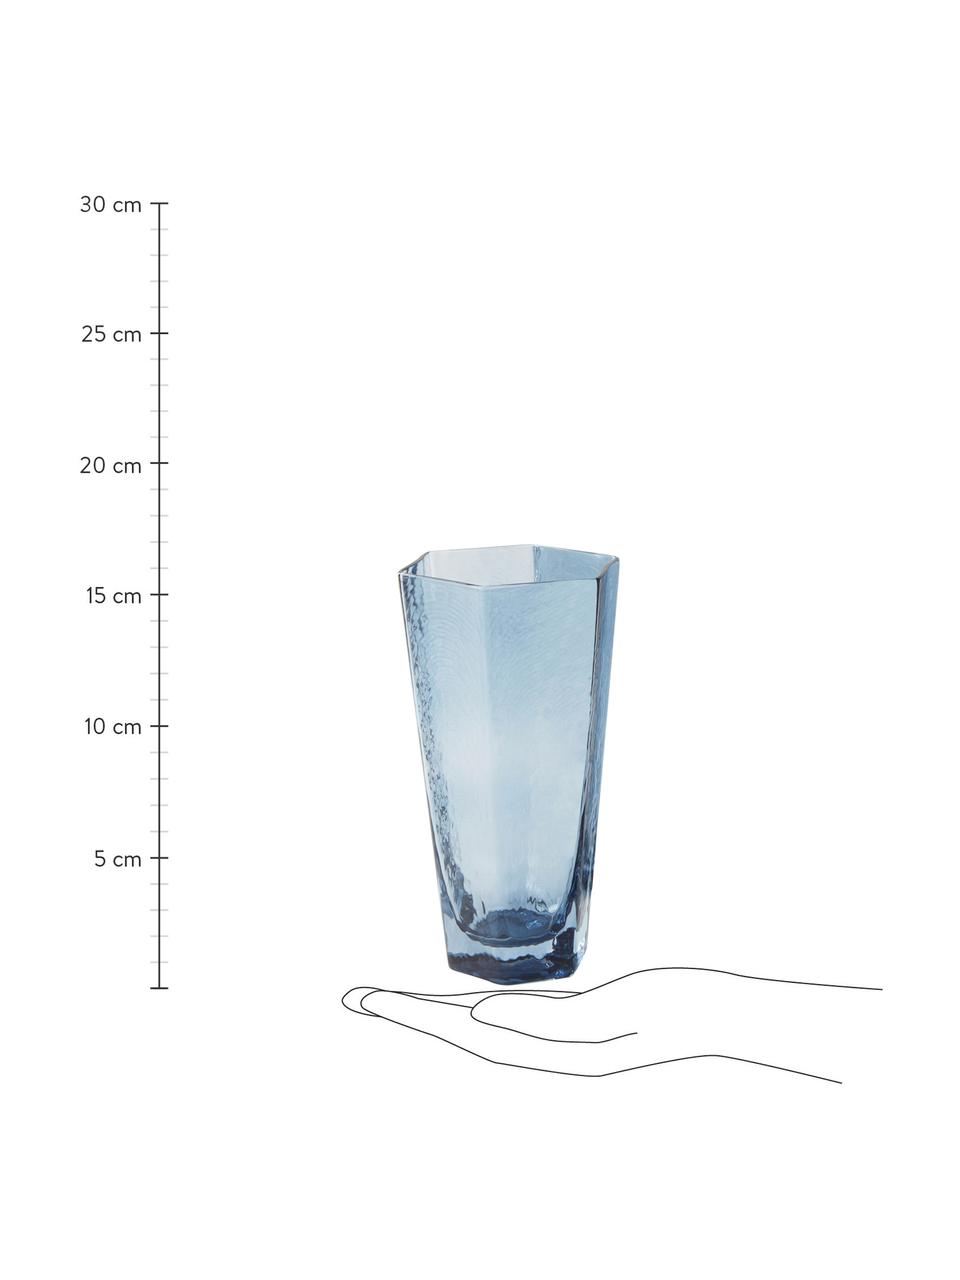 Waterglazen Amory in blauw, 4 stuks, Glas, Blauw, transparant, Ø 9 x H 17 cm, 500 ml